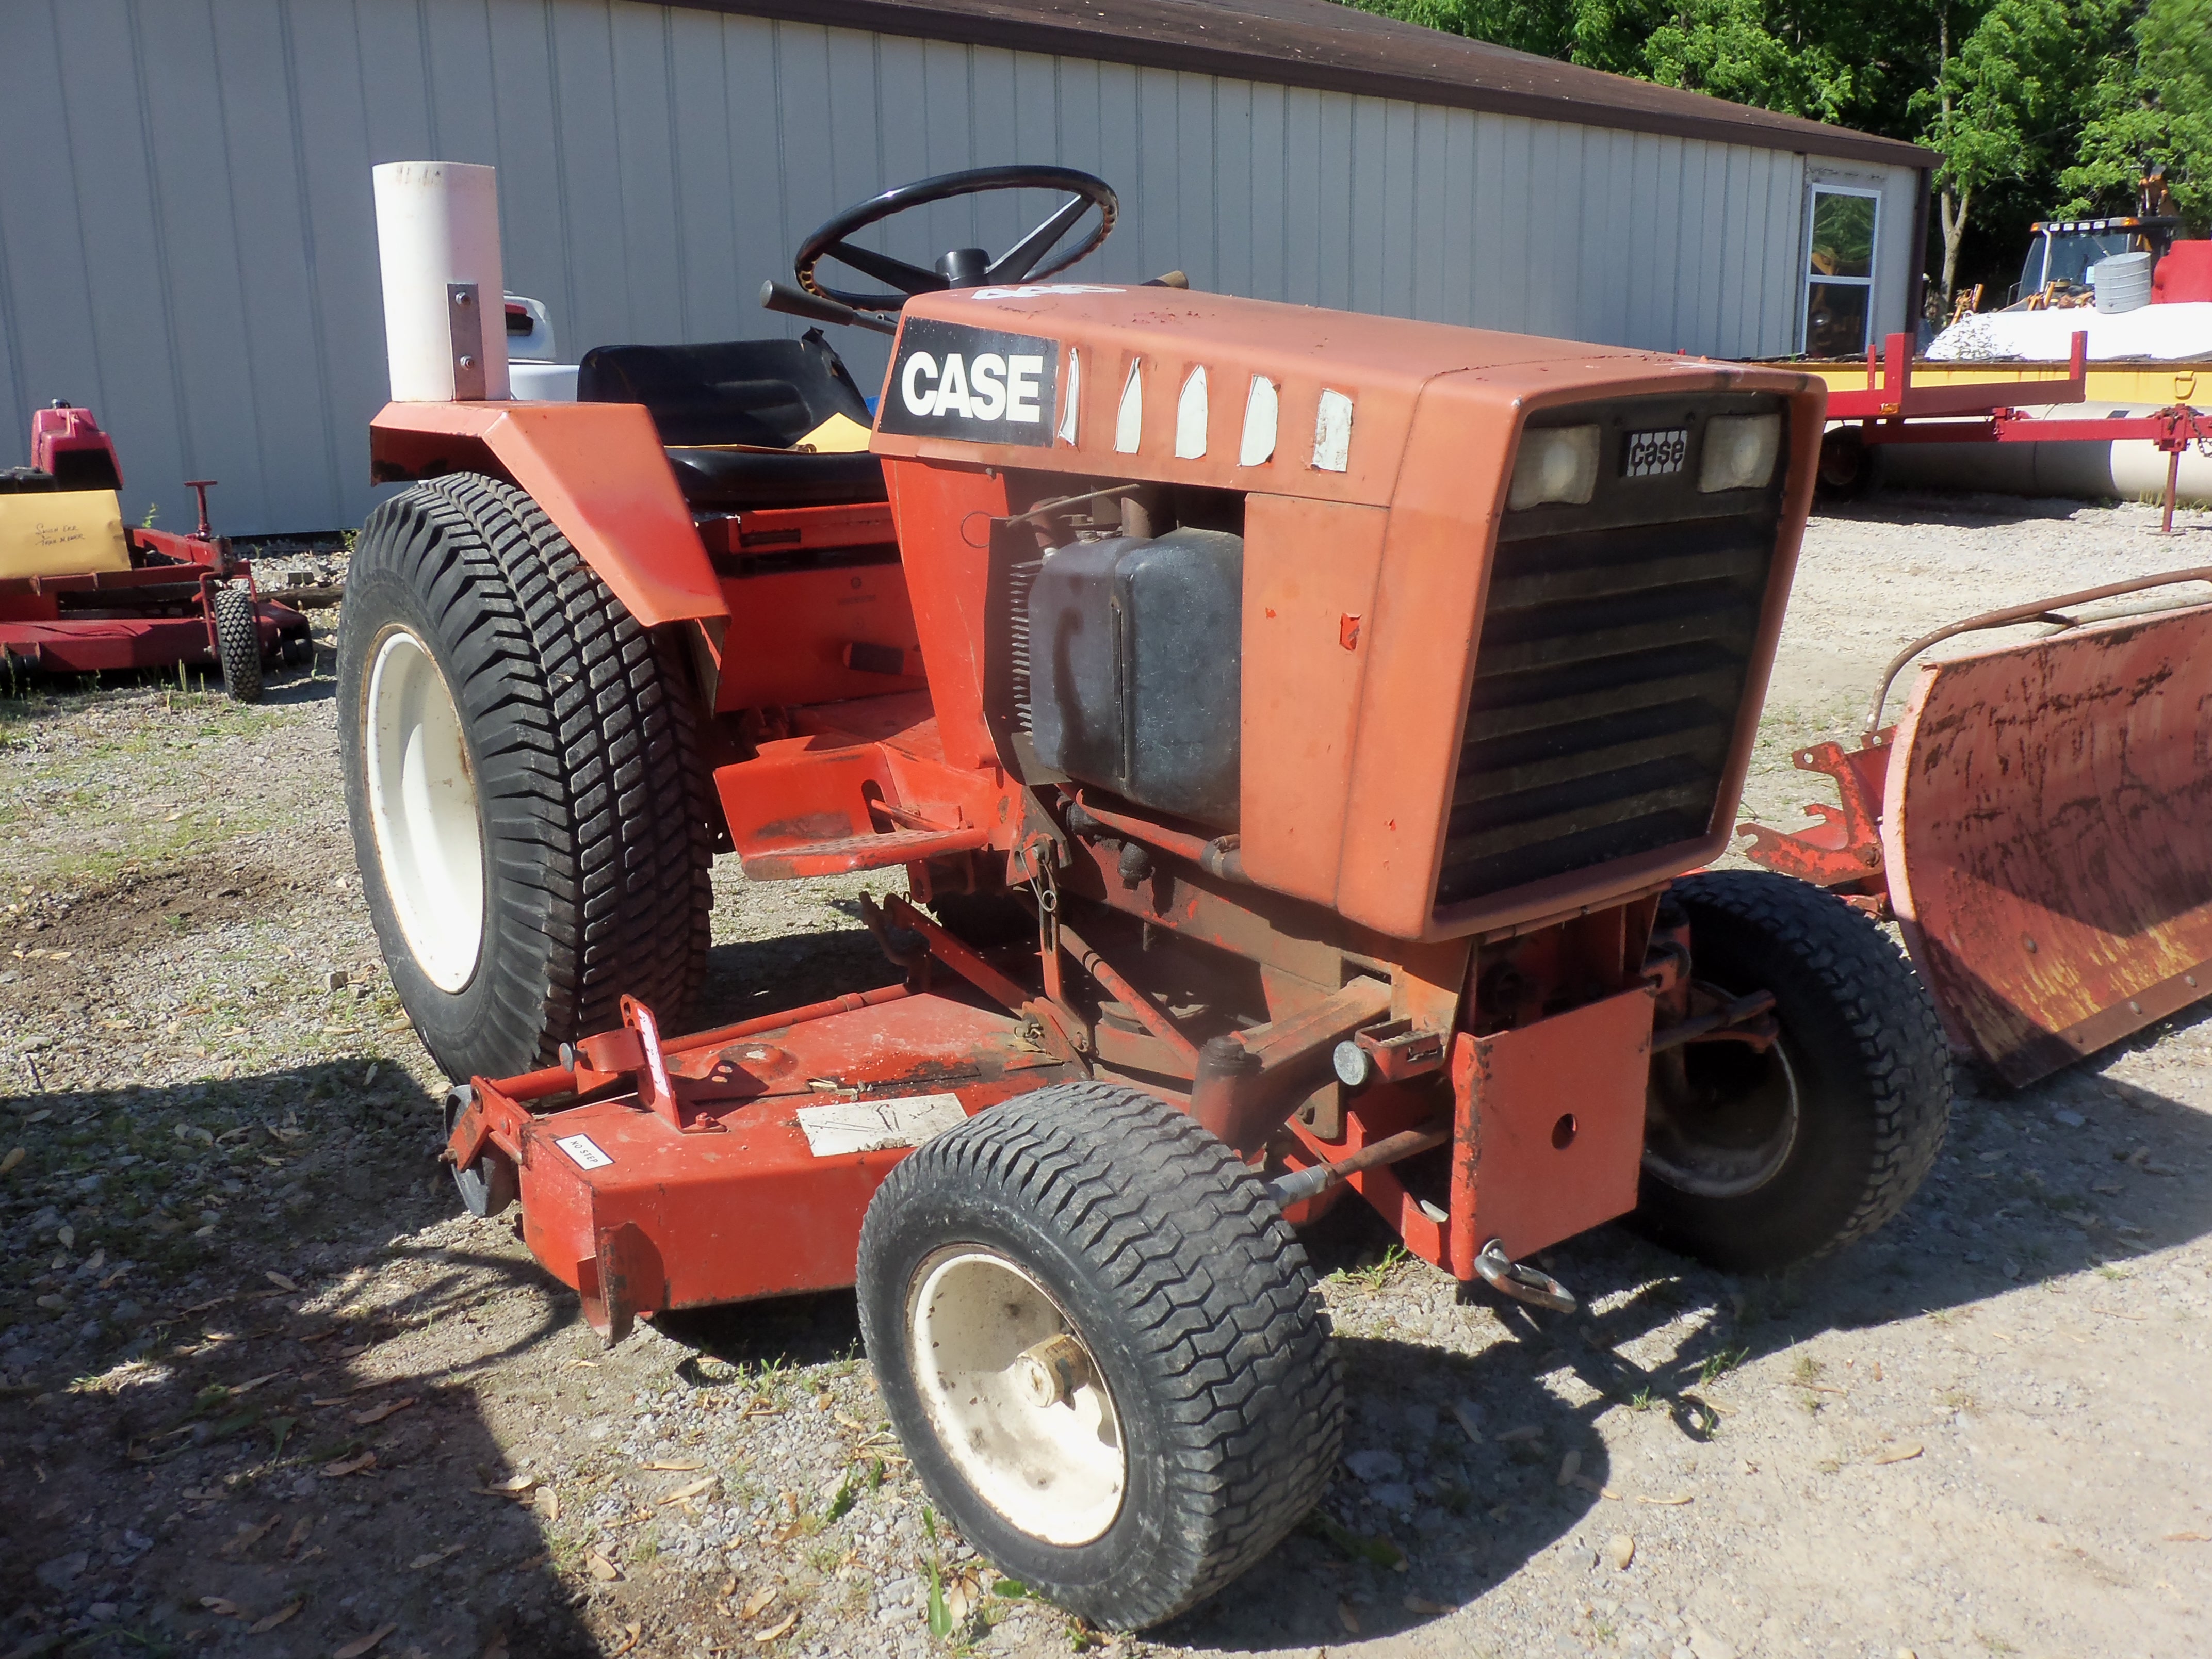 Case 446 garden tractor | J I Case Equipment | Pinterest